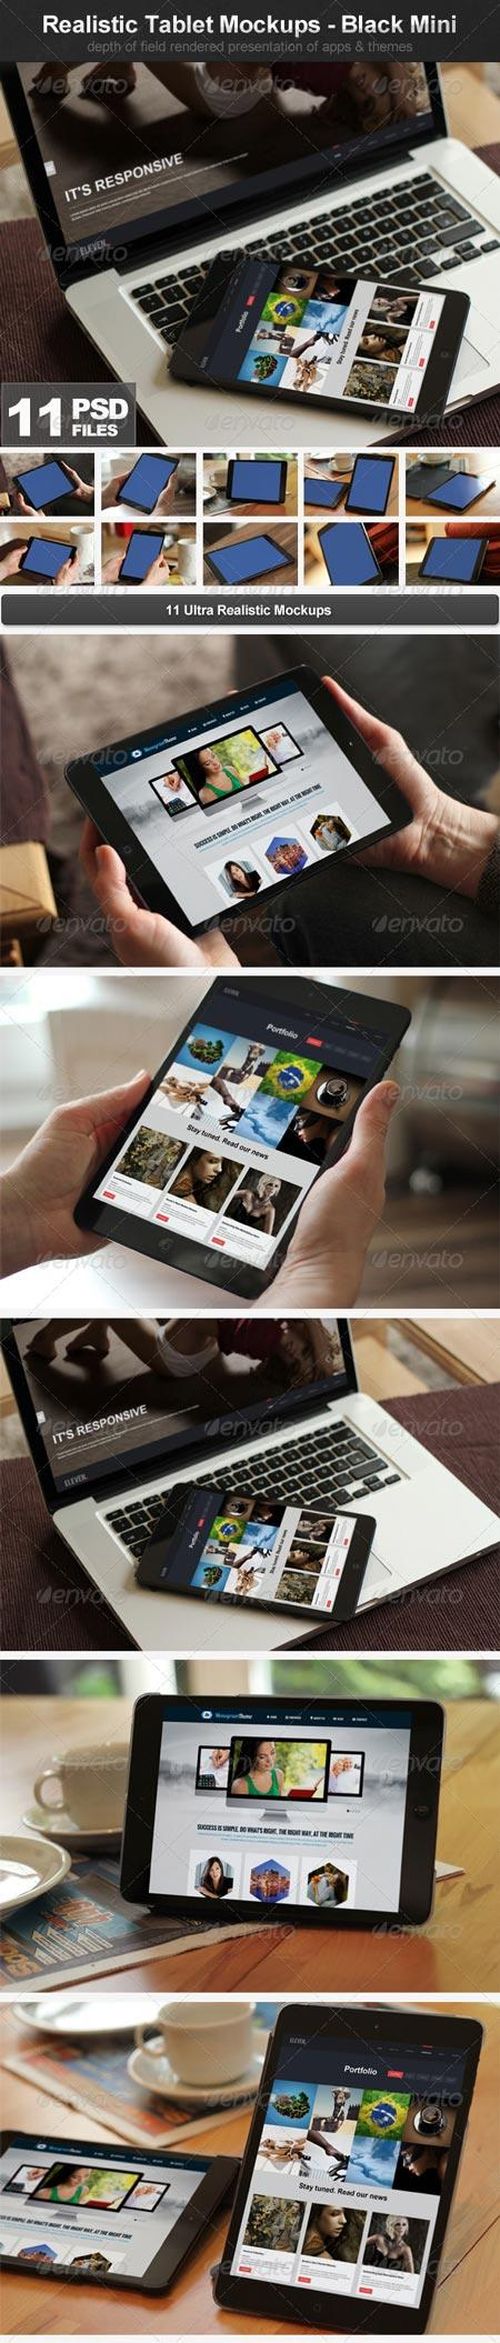 PSD - Realistic Tablet Mockups - Black Mini